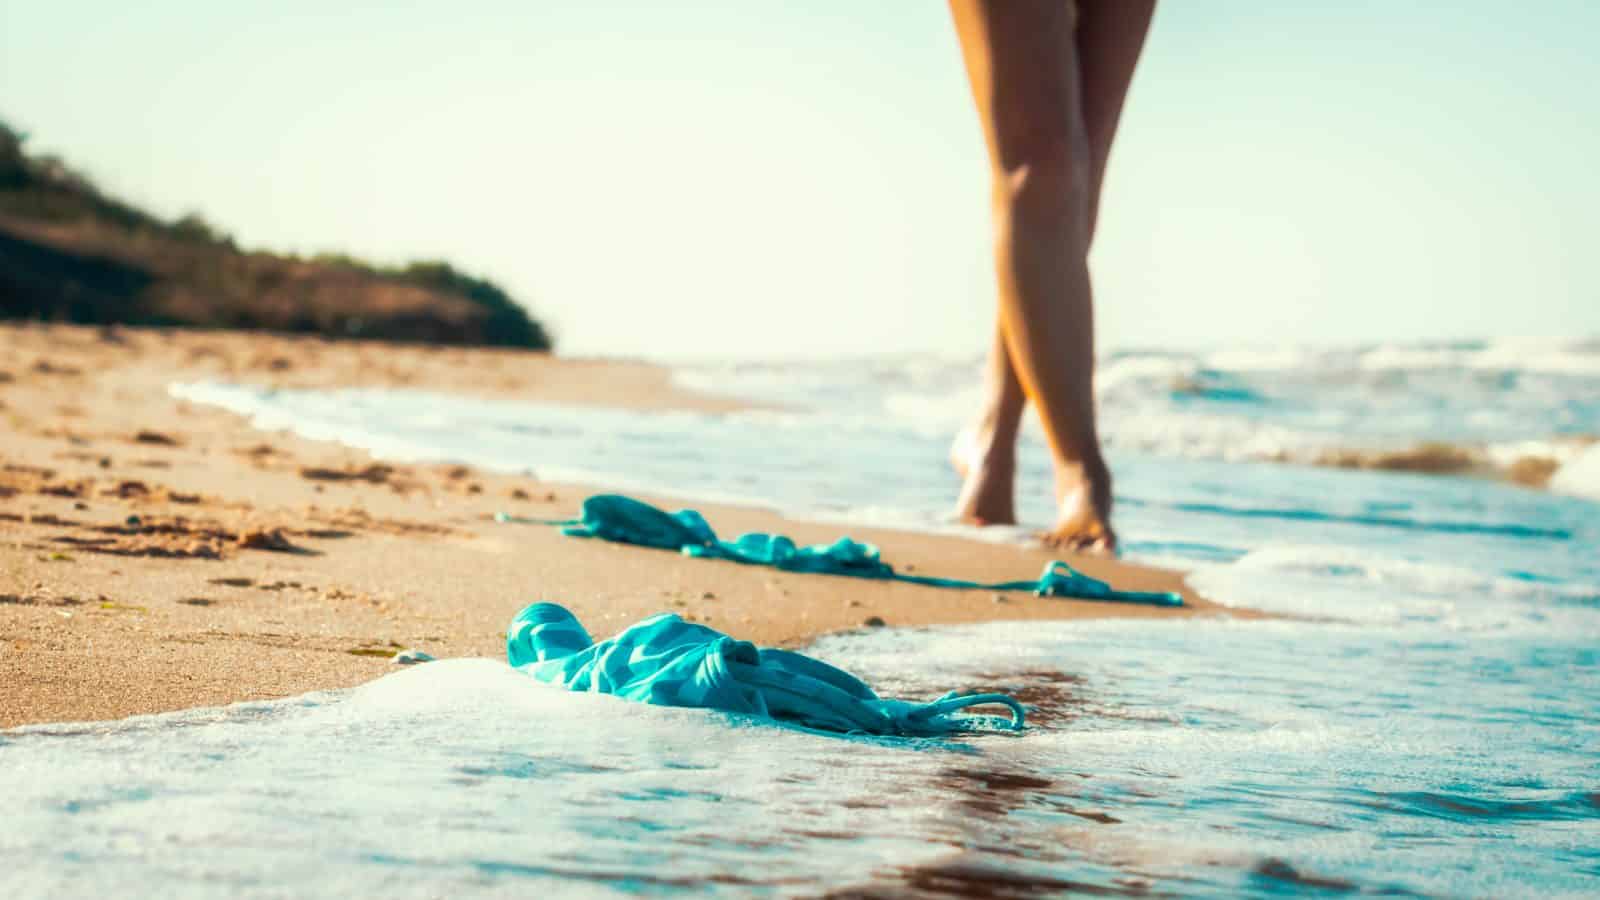 florida nudist beach party video gallerie photo